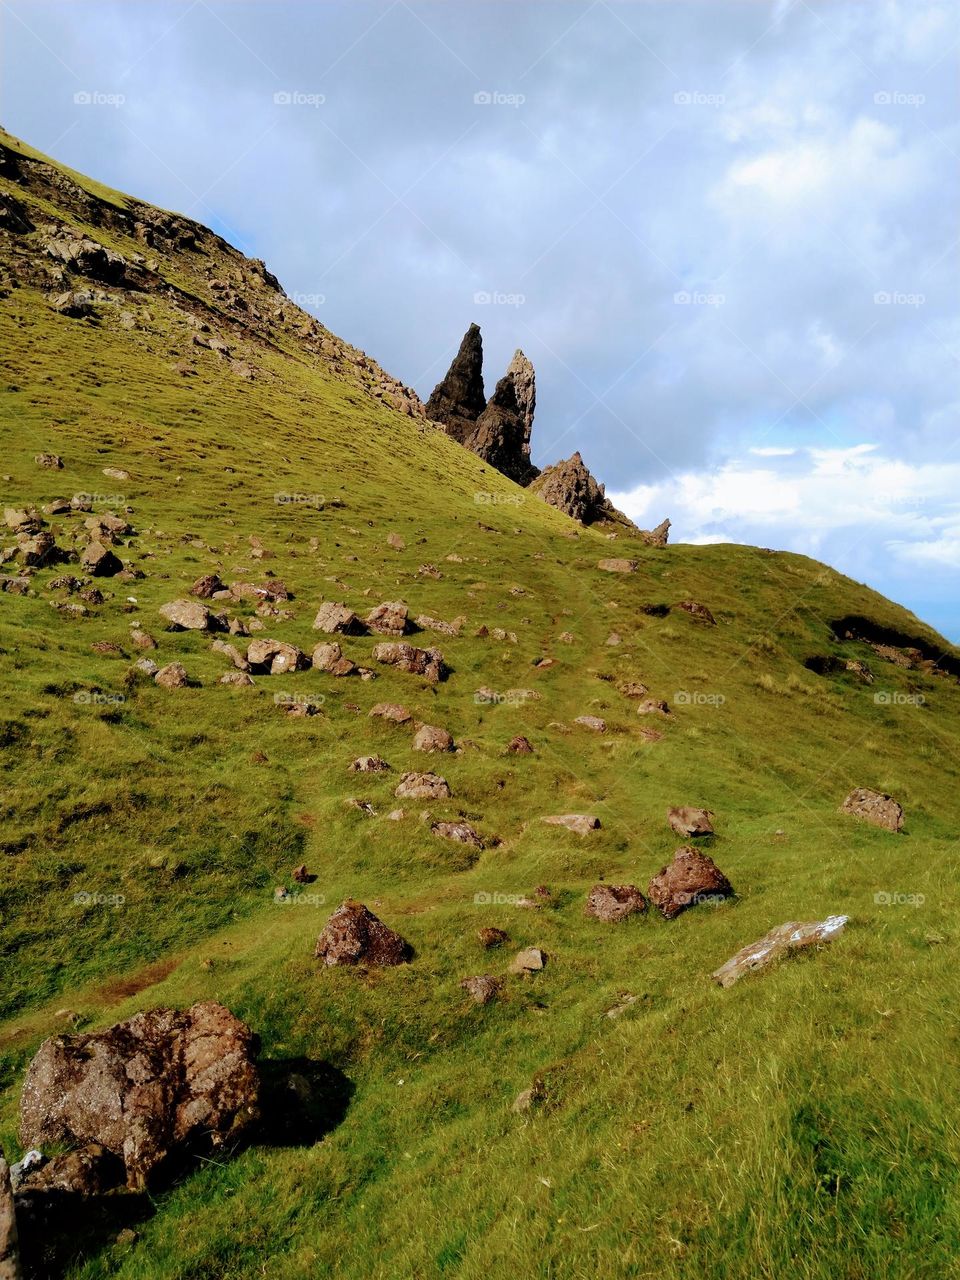 Old Man of Storr taken from a distance, Scotland landscape